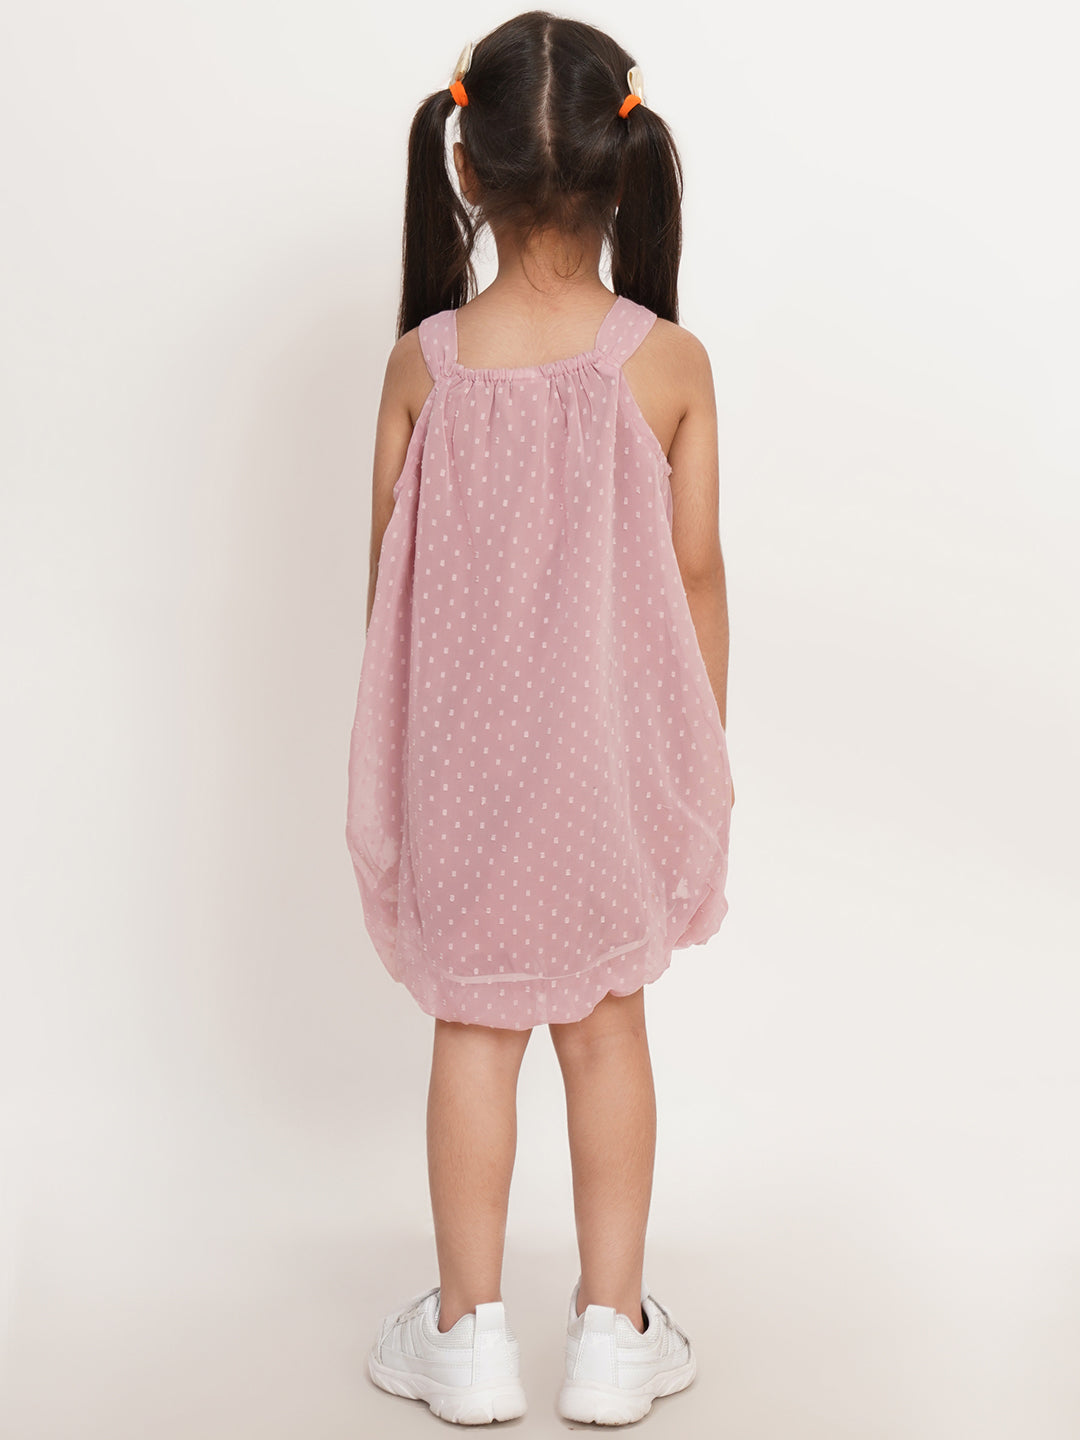 CREATIVE KID'S Girl Cream Swiss-Dot Print Balloon Dress